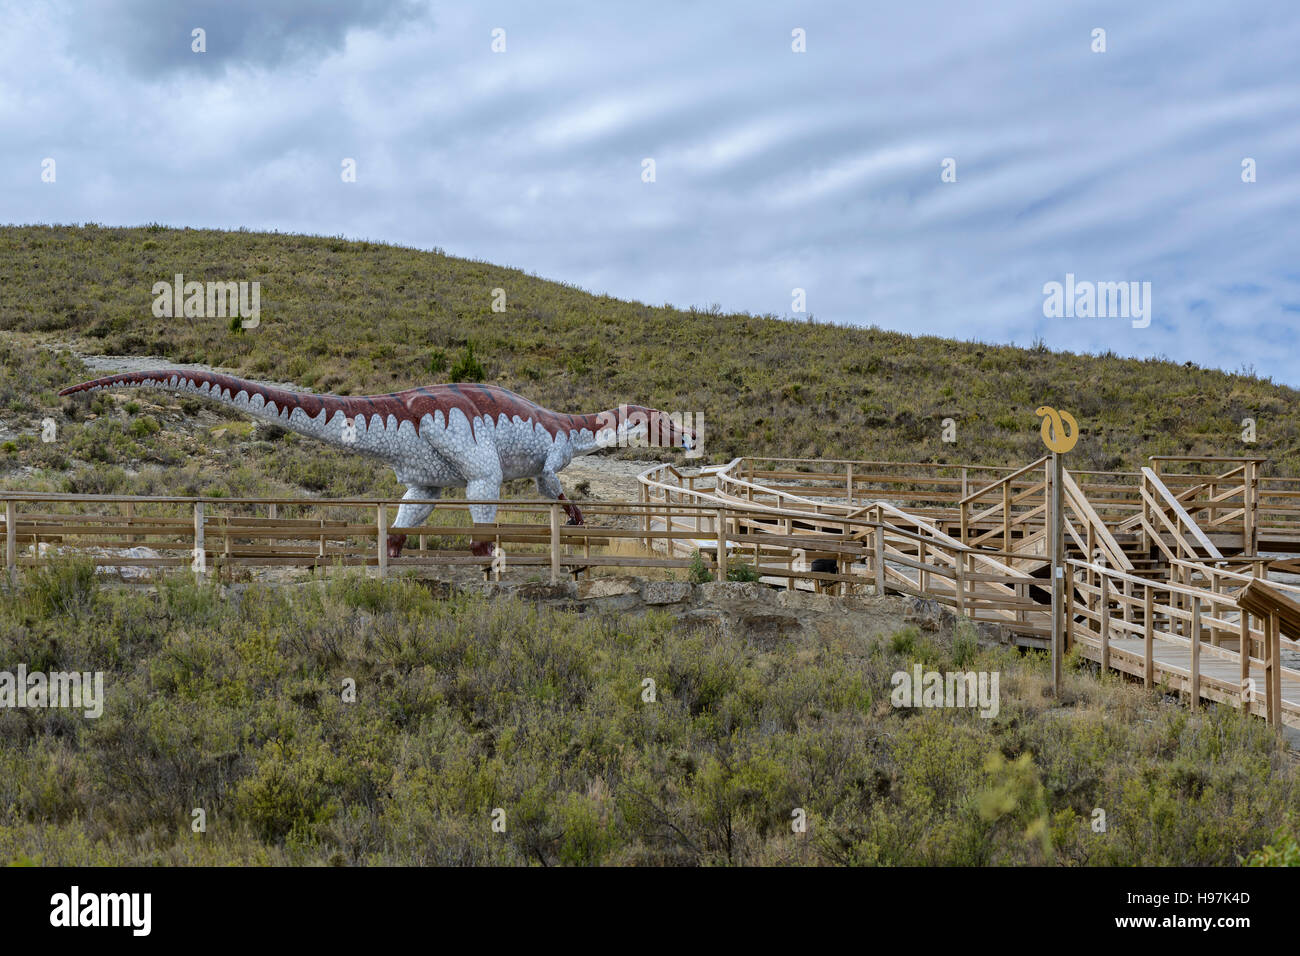 Dinosaurier Baryonyx, Igea, La Rioja, Spanien, Europa Stockfoto